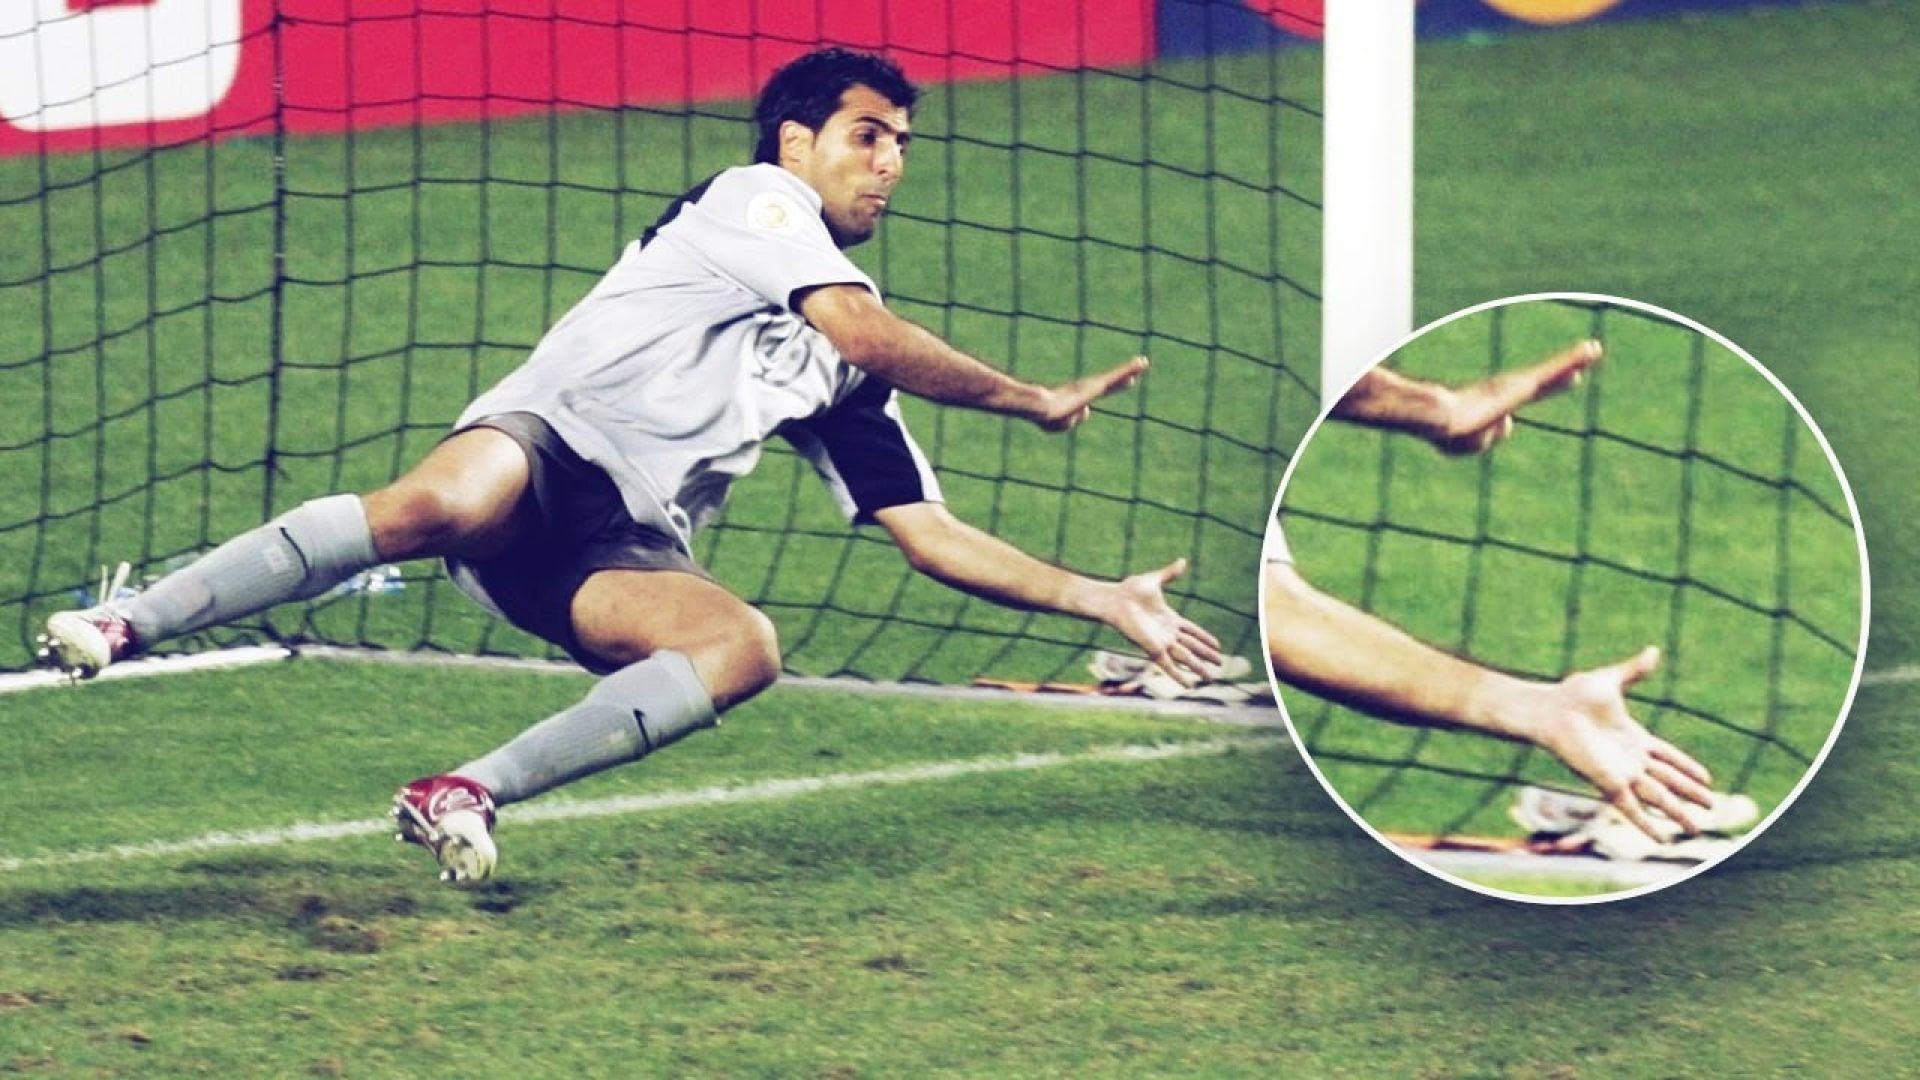 Ricardo Heroic Penalty Save and Winning Goal